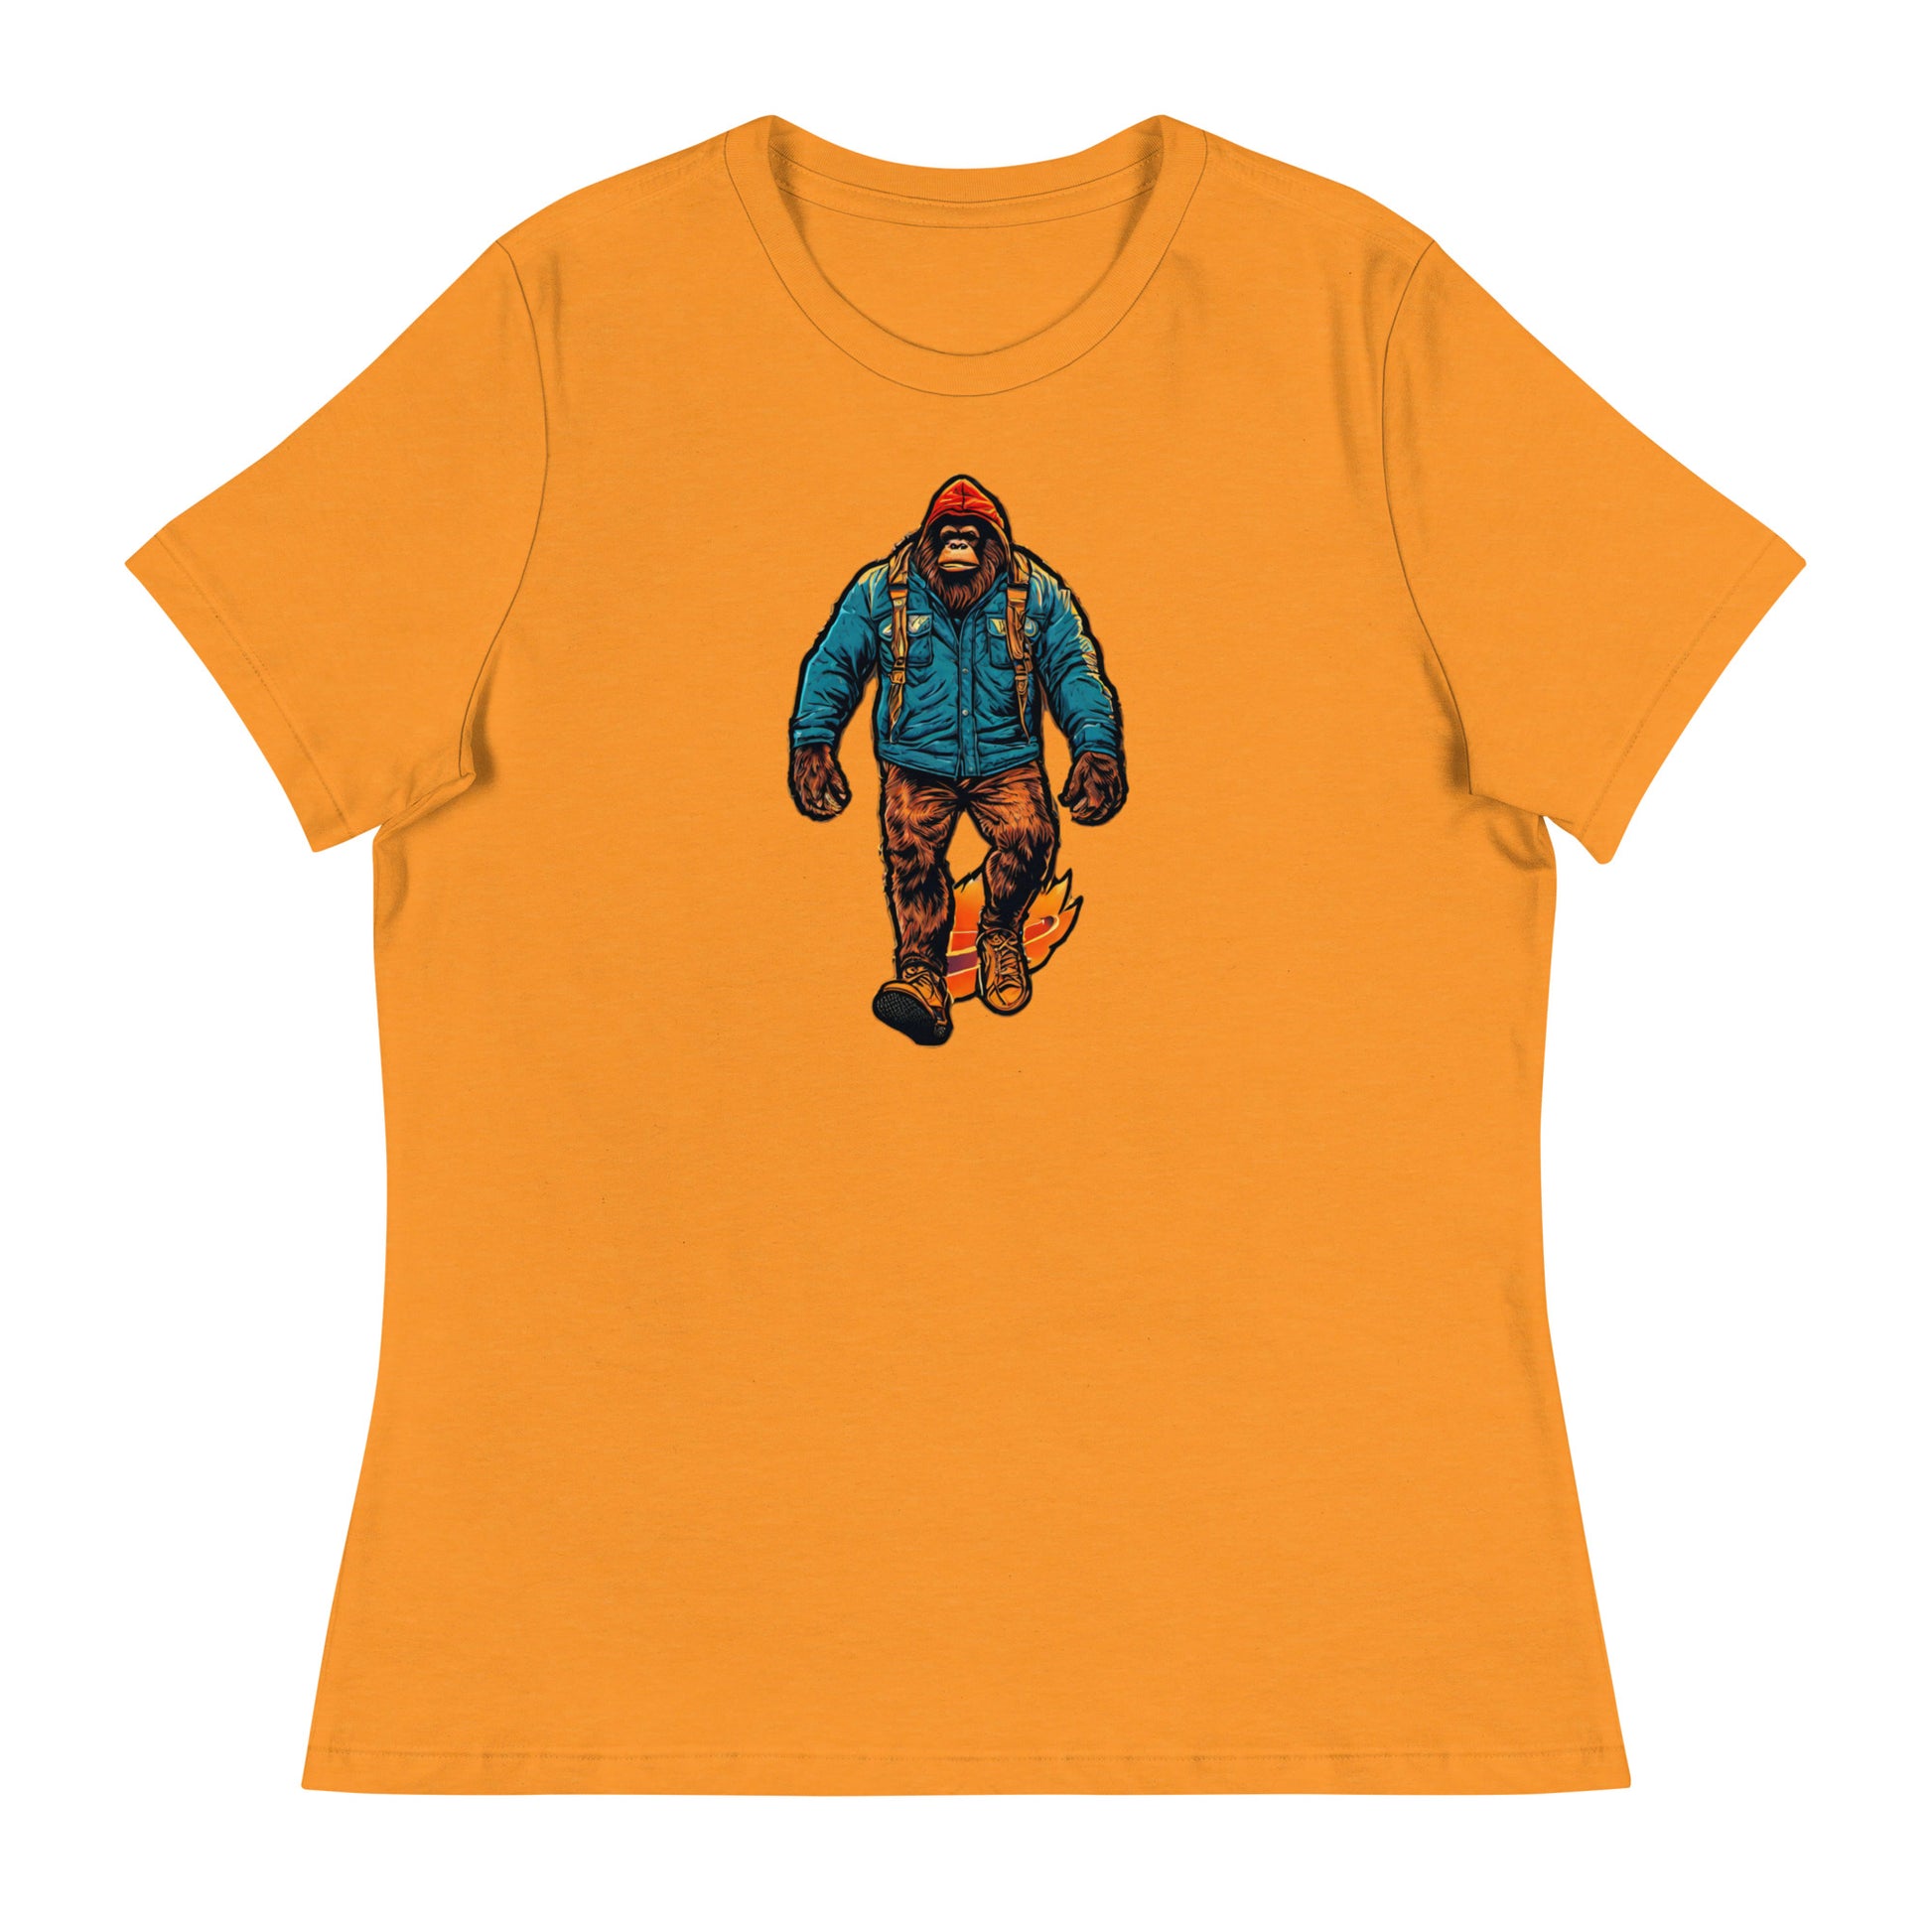 Bigfoot on a Hike Women's Graphic T-Shirt Heather Marmalade